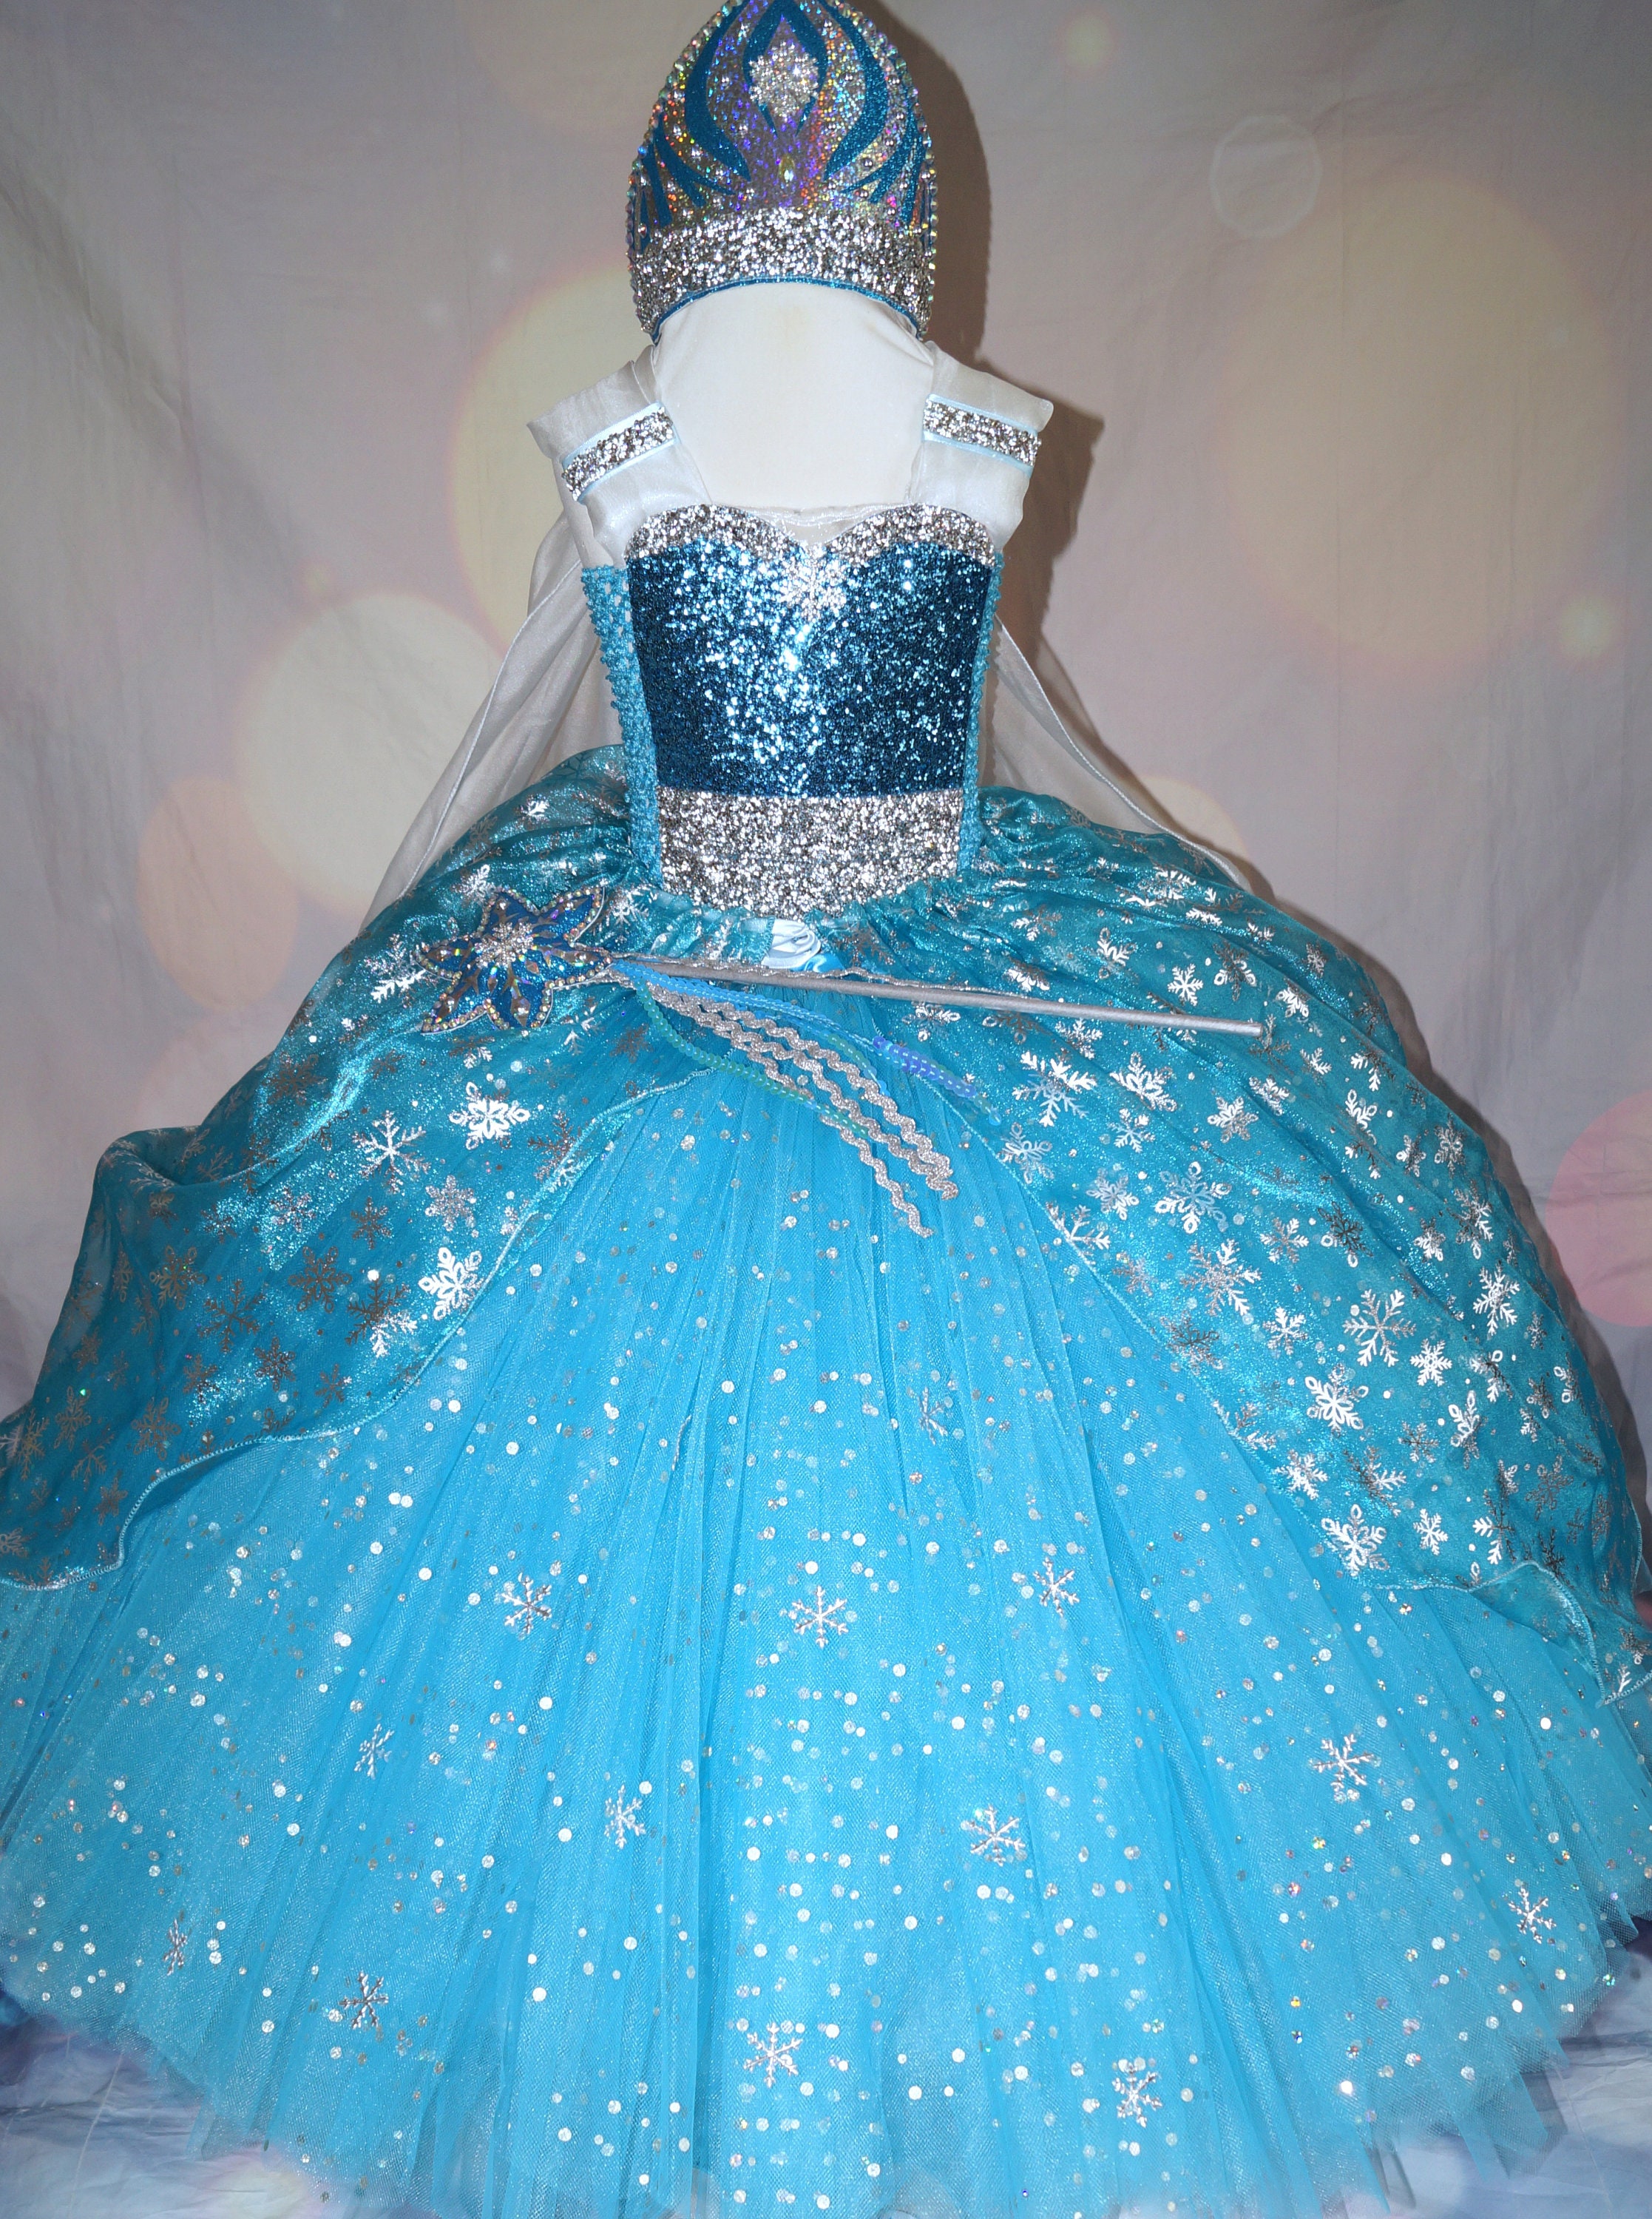 Elsa Dress 2t|elsa-inspired Floral Ball Gown For Girls - Lace & Satin  Christmas Dress